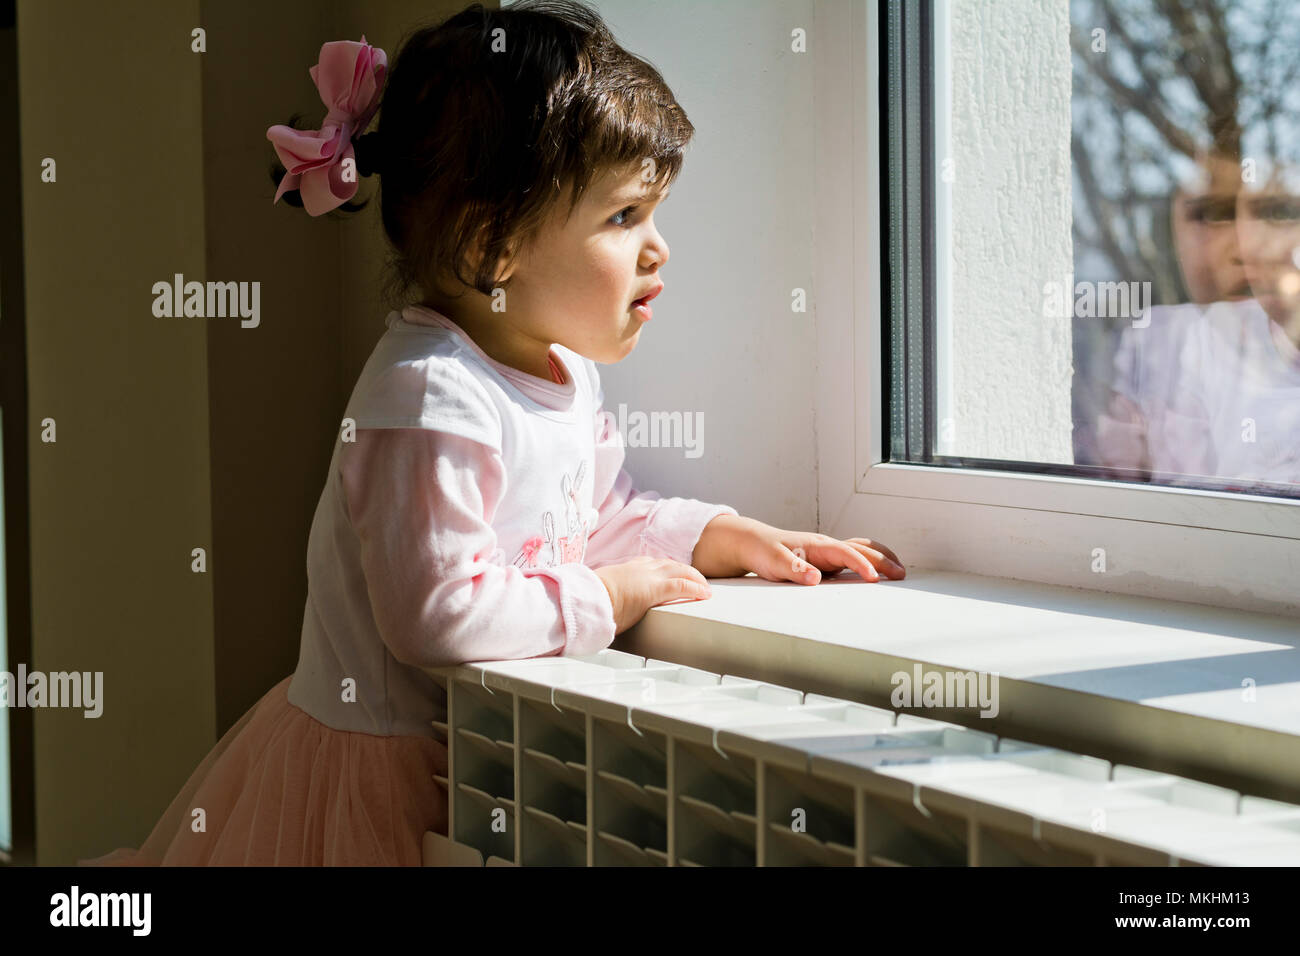 Girl Waiting at window Stock Photo